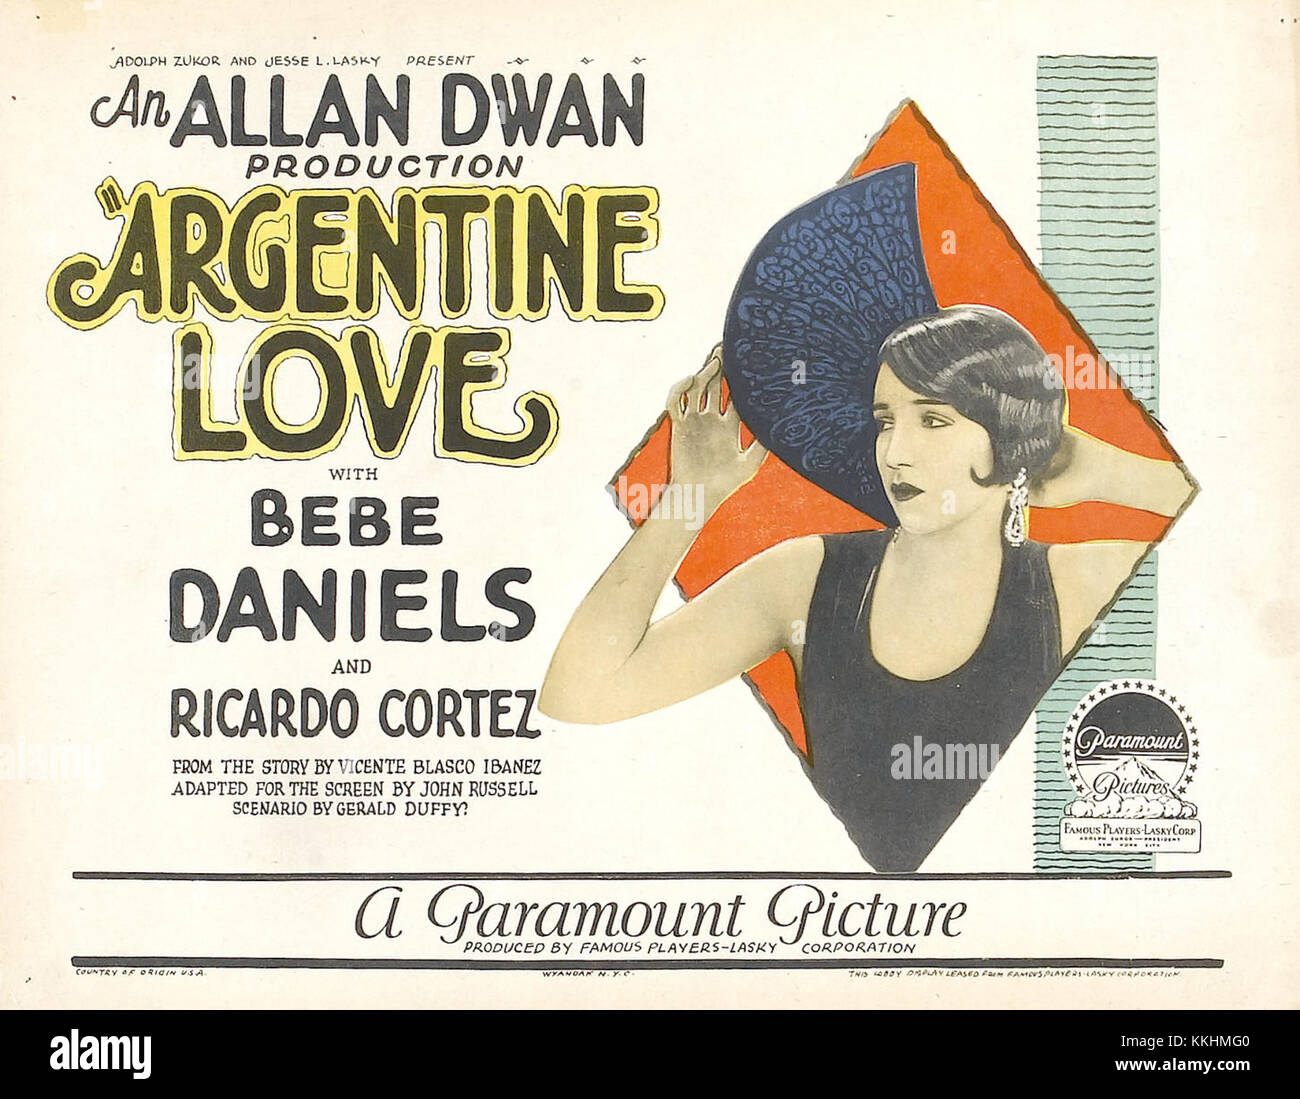 Argentinelove-lobbycard-1924 Stock Photo